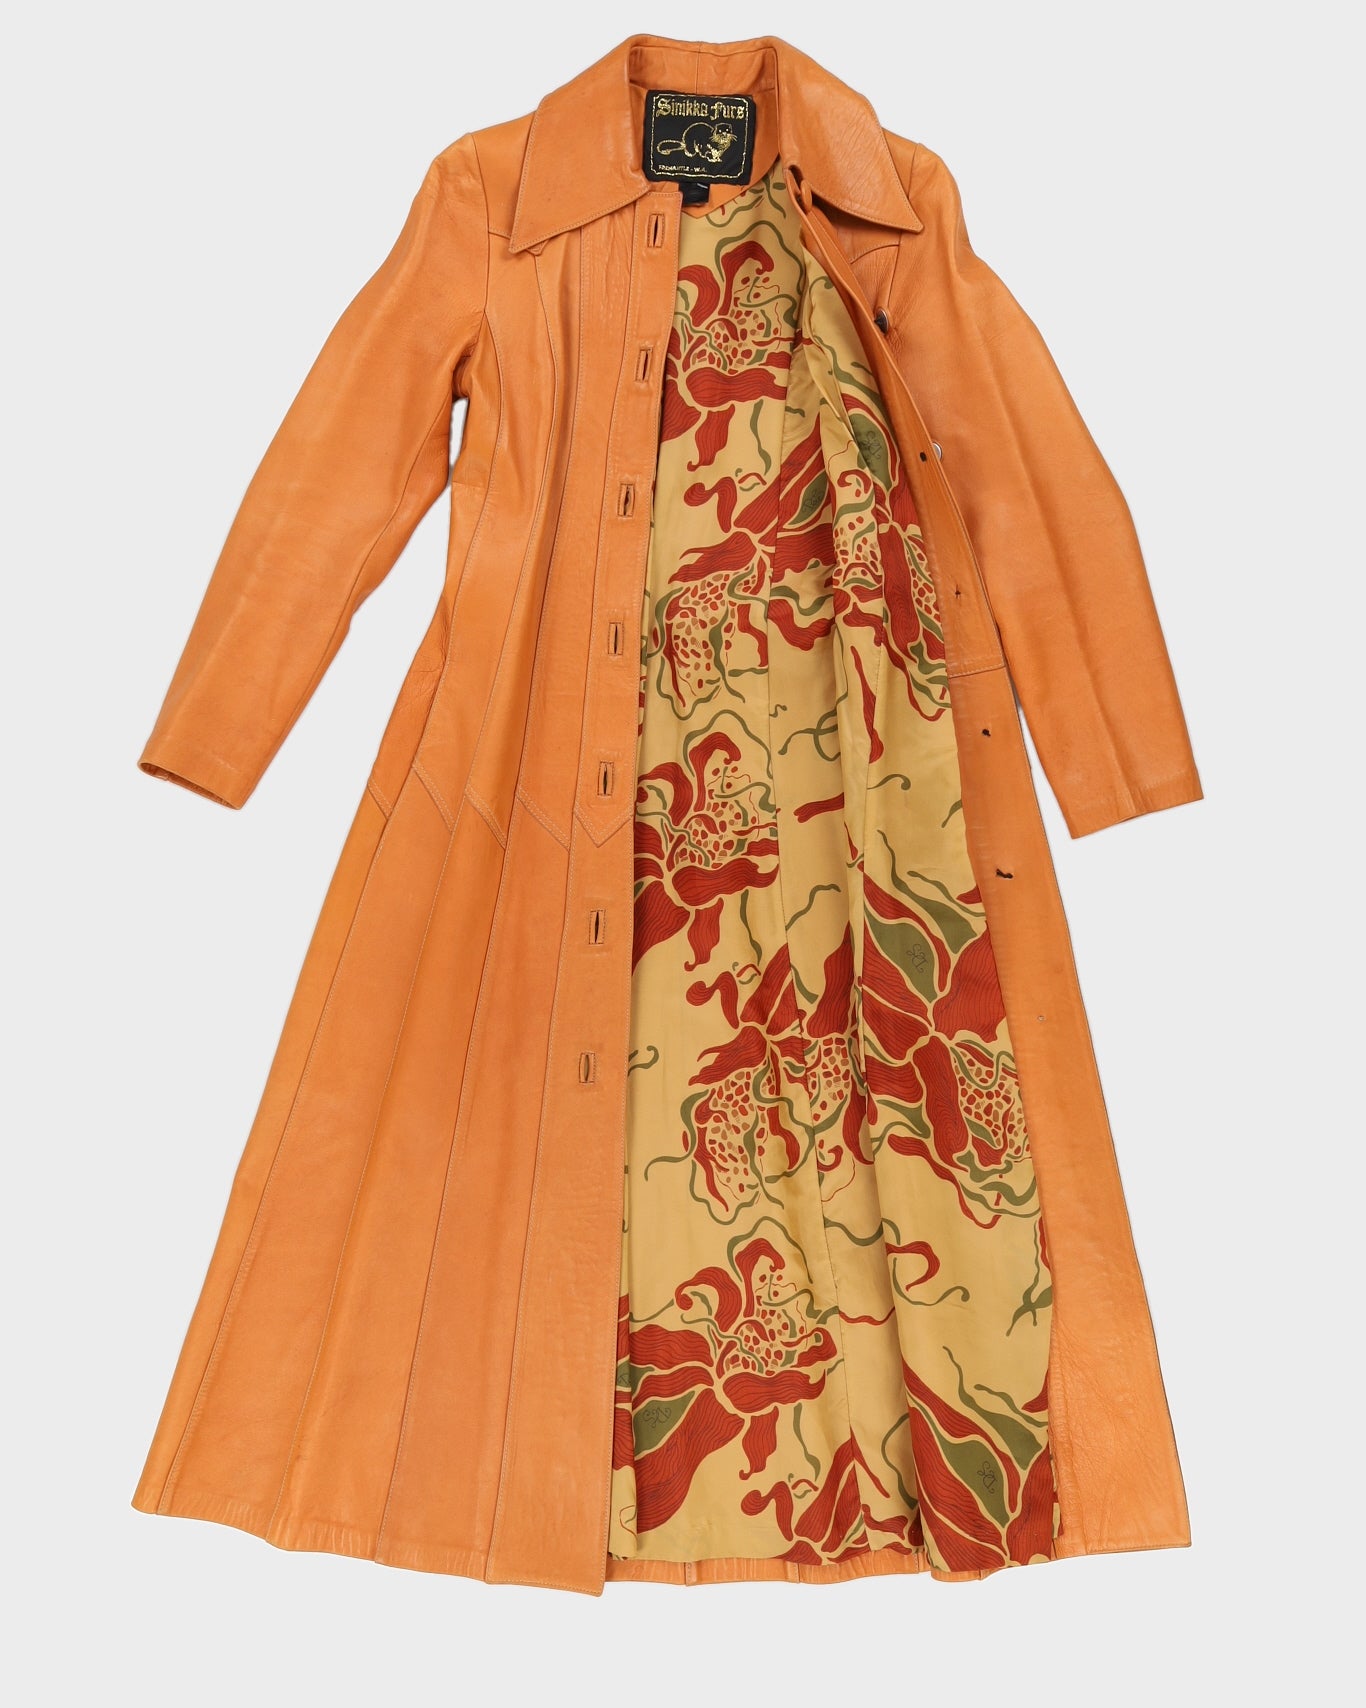 Vintage 70s Sinnika Furs Orange Leather Coat - XS